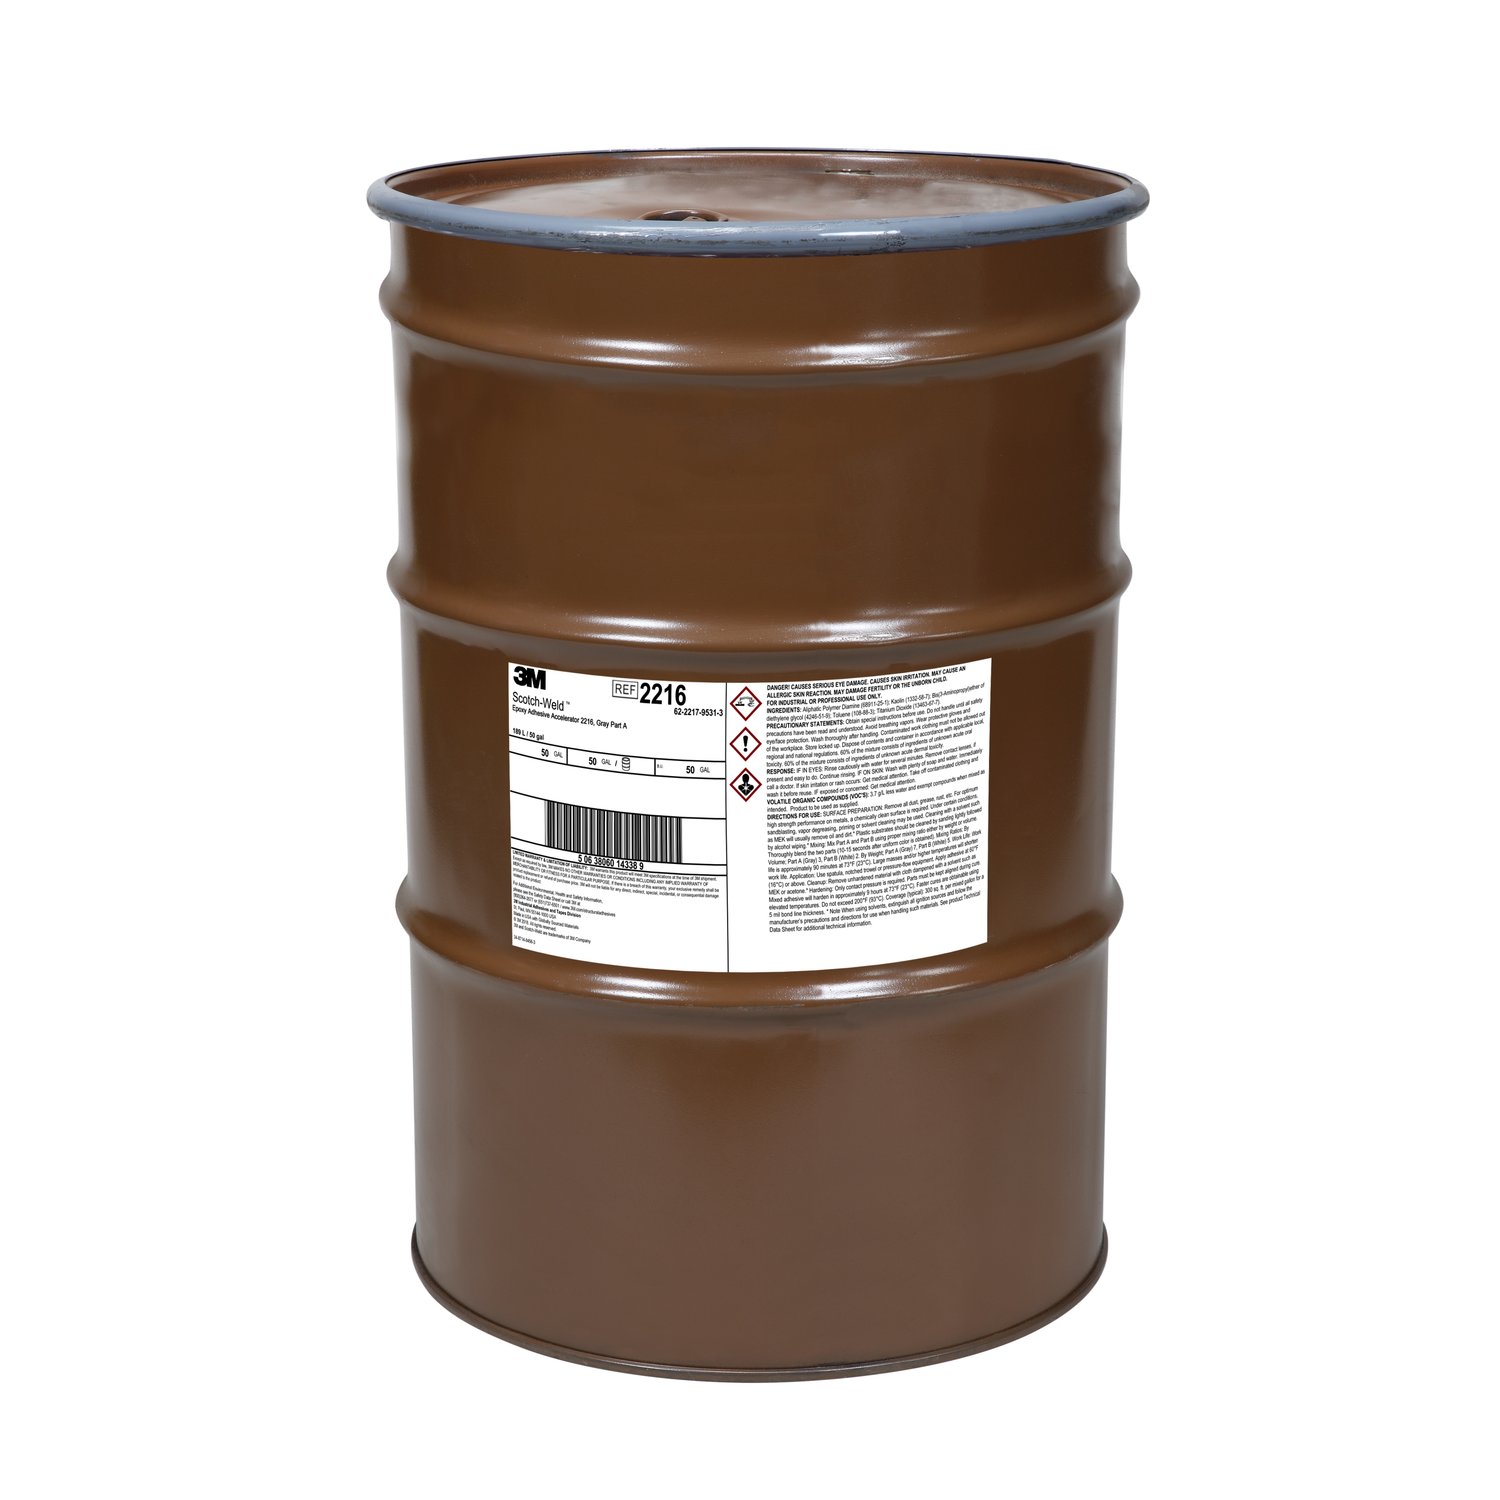 7100166318 - 3M Scotch-Weld Epoxy Adhesive 2216, Gray, Part A, 55 Gallon (50 Gallon
Net), Drum